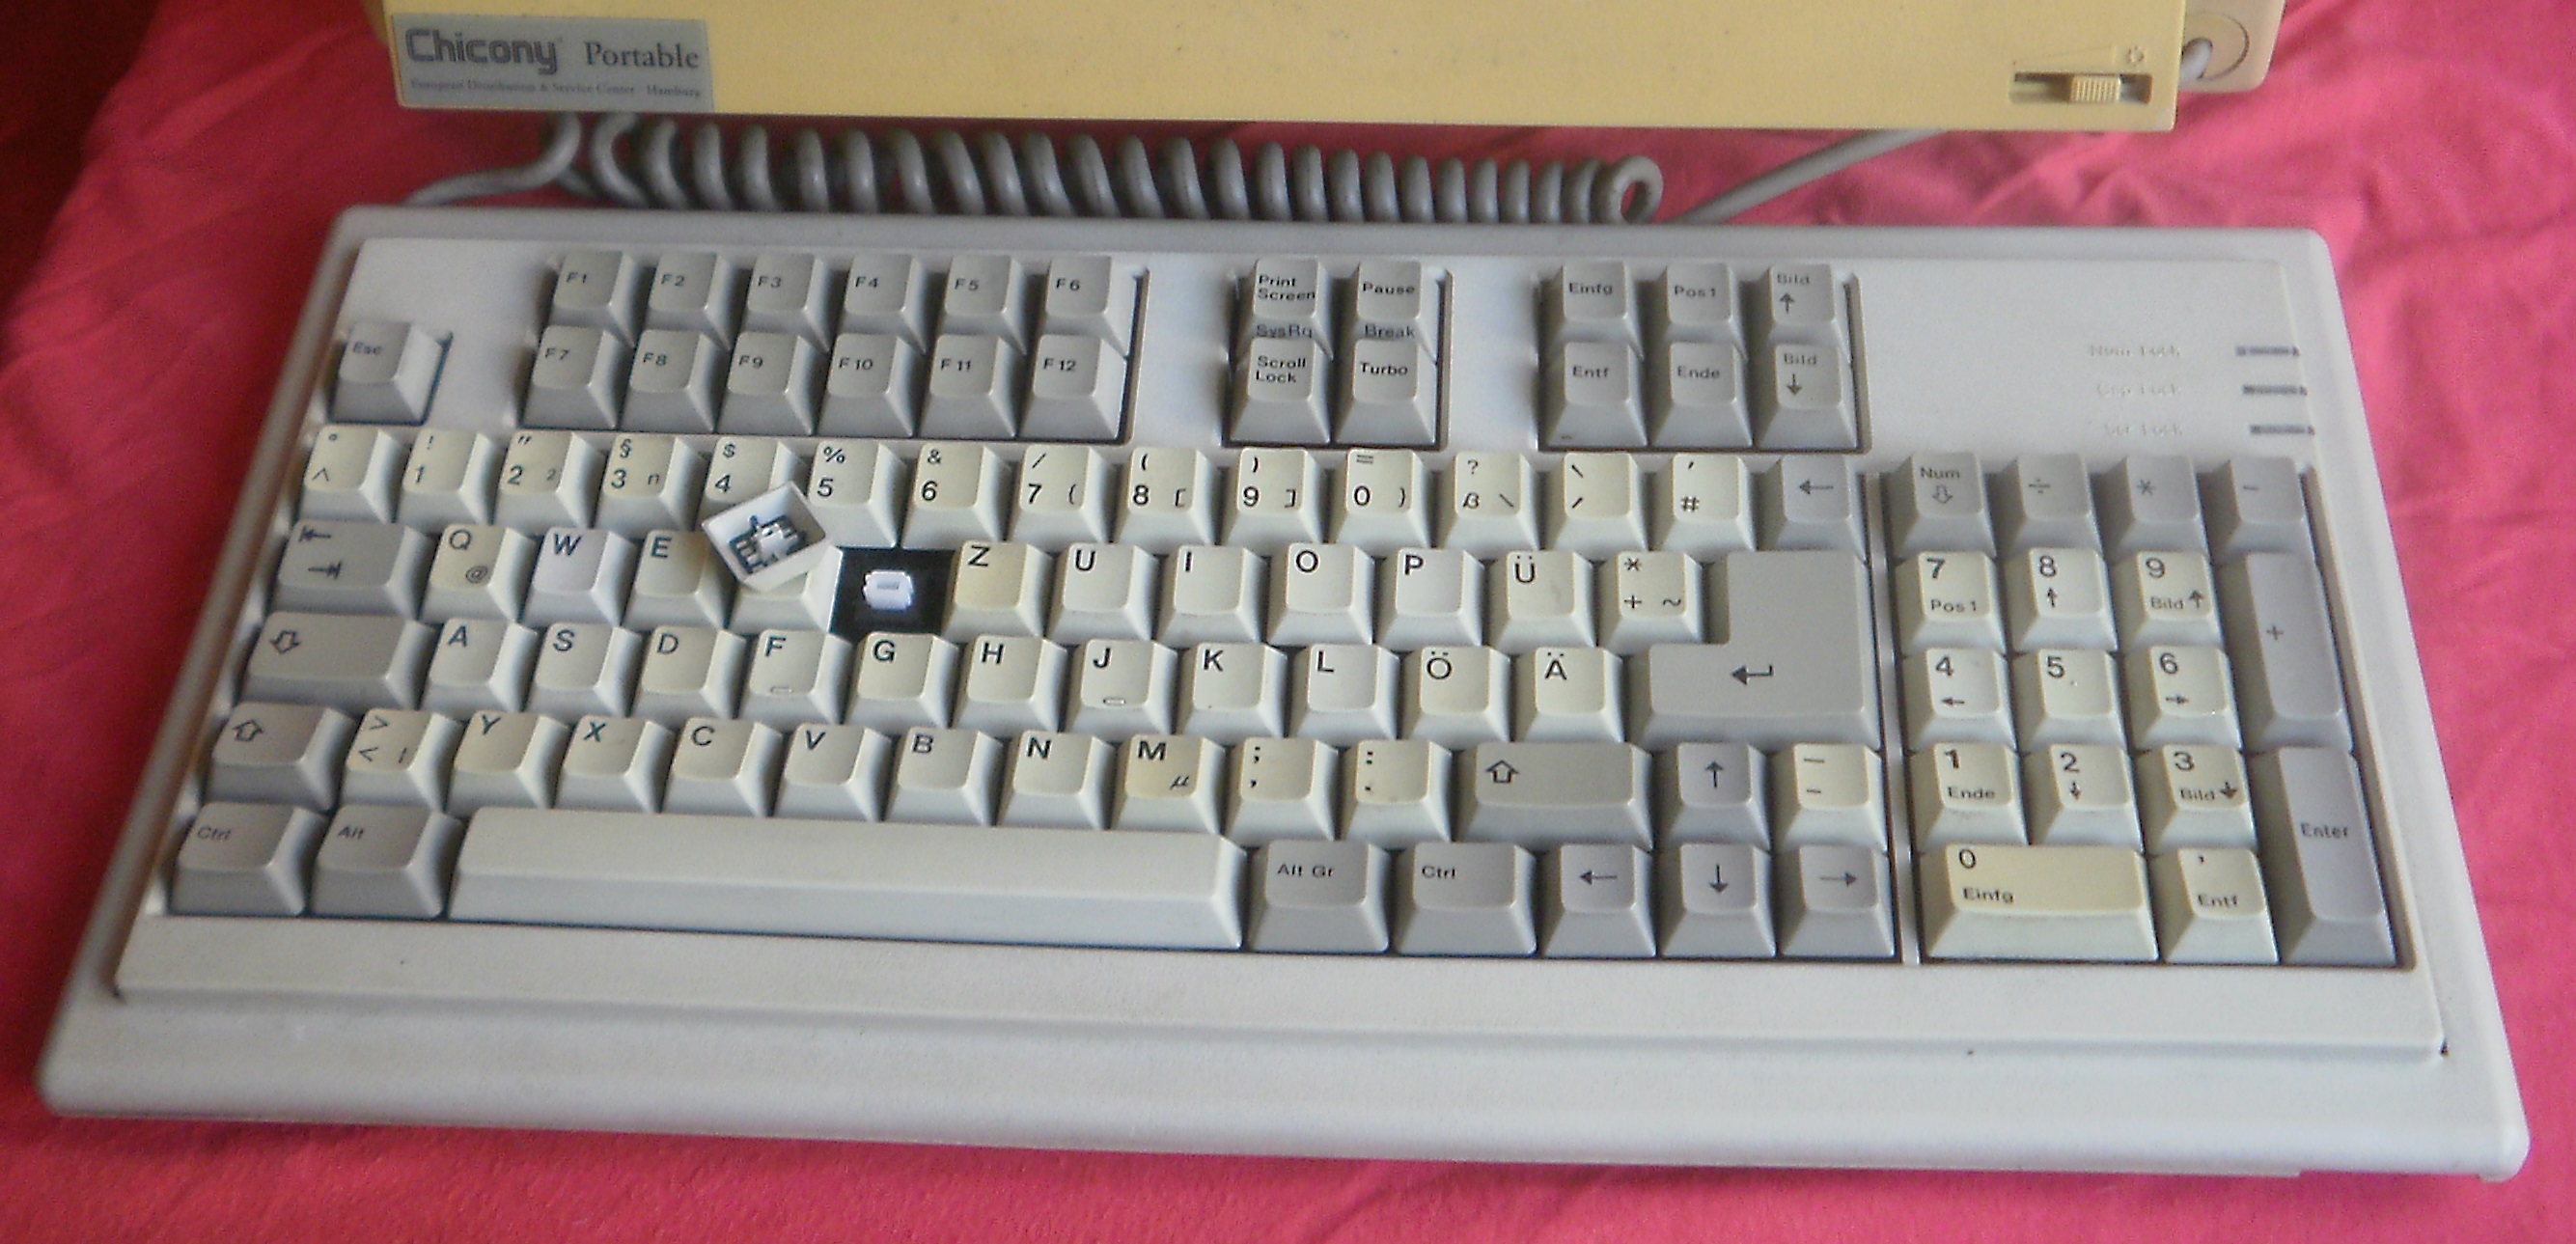 keyboard of portable chicony.jpg